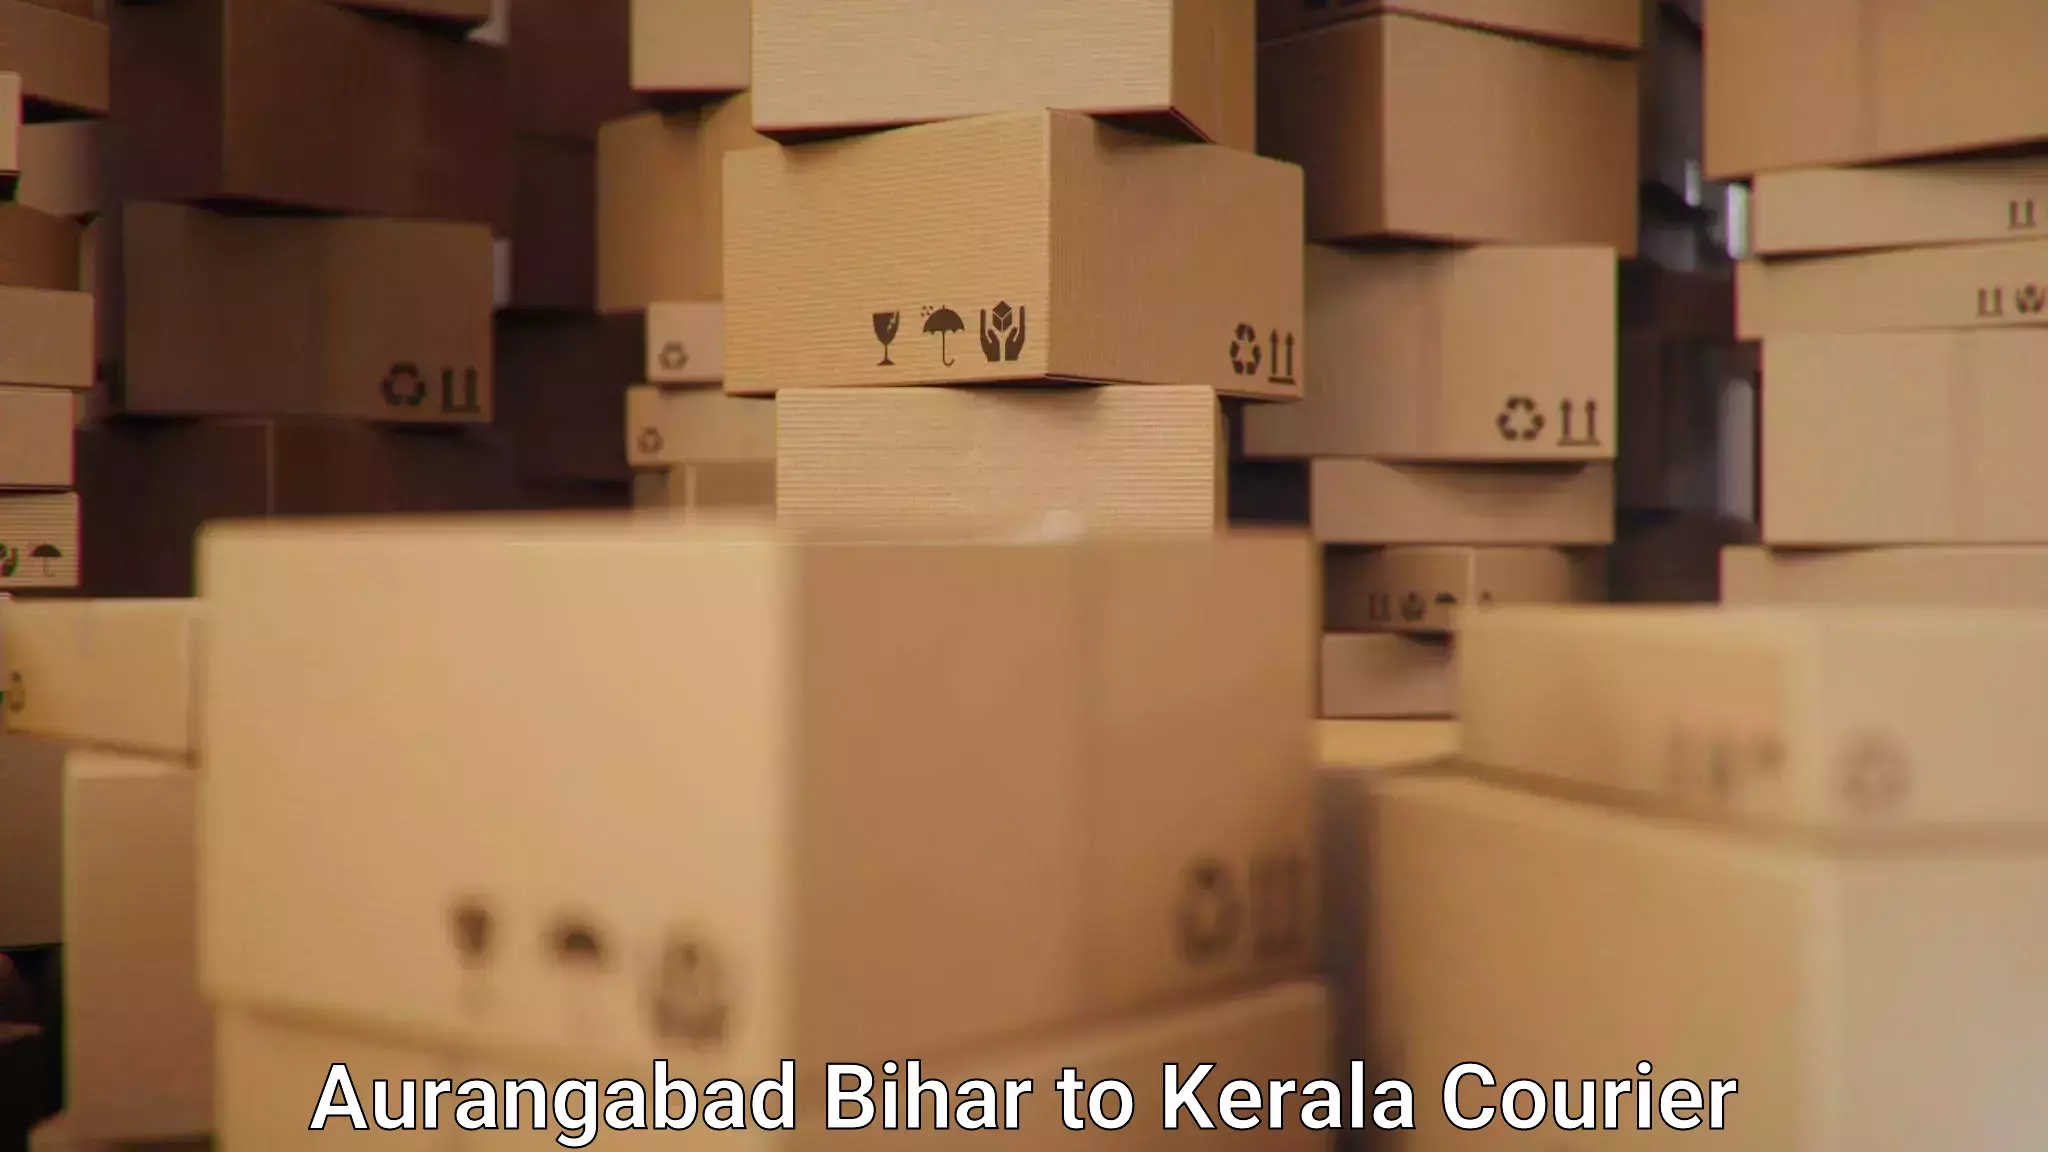 Supply chain delivery Aurangabad Bihar to Alathur Malabar